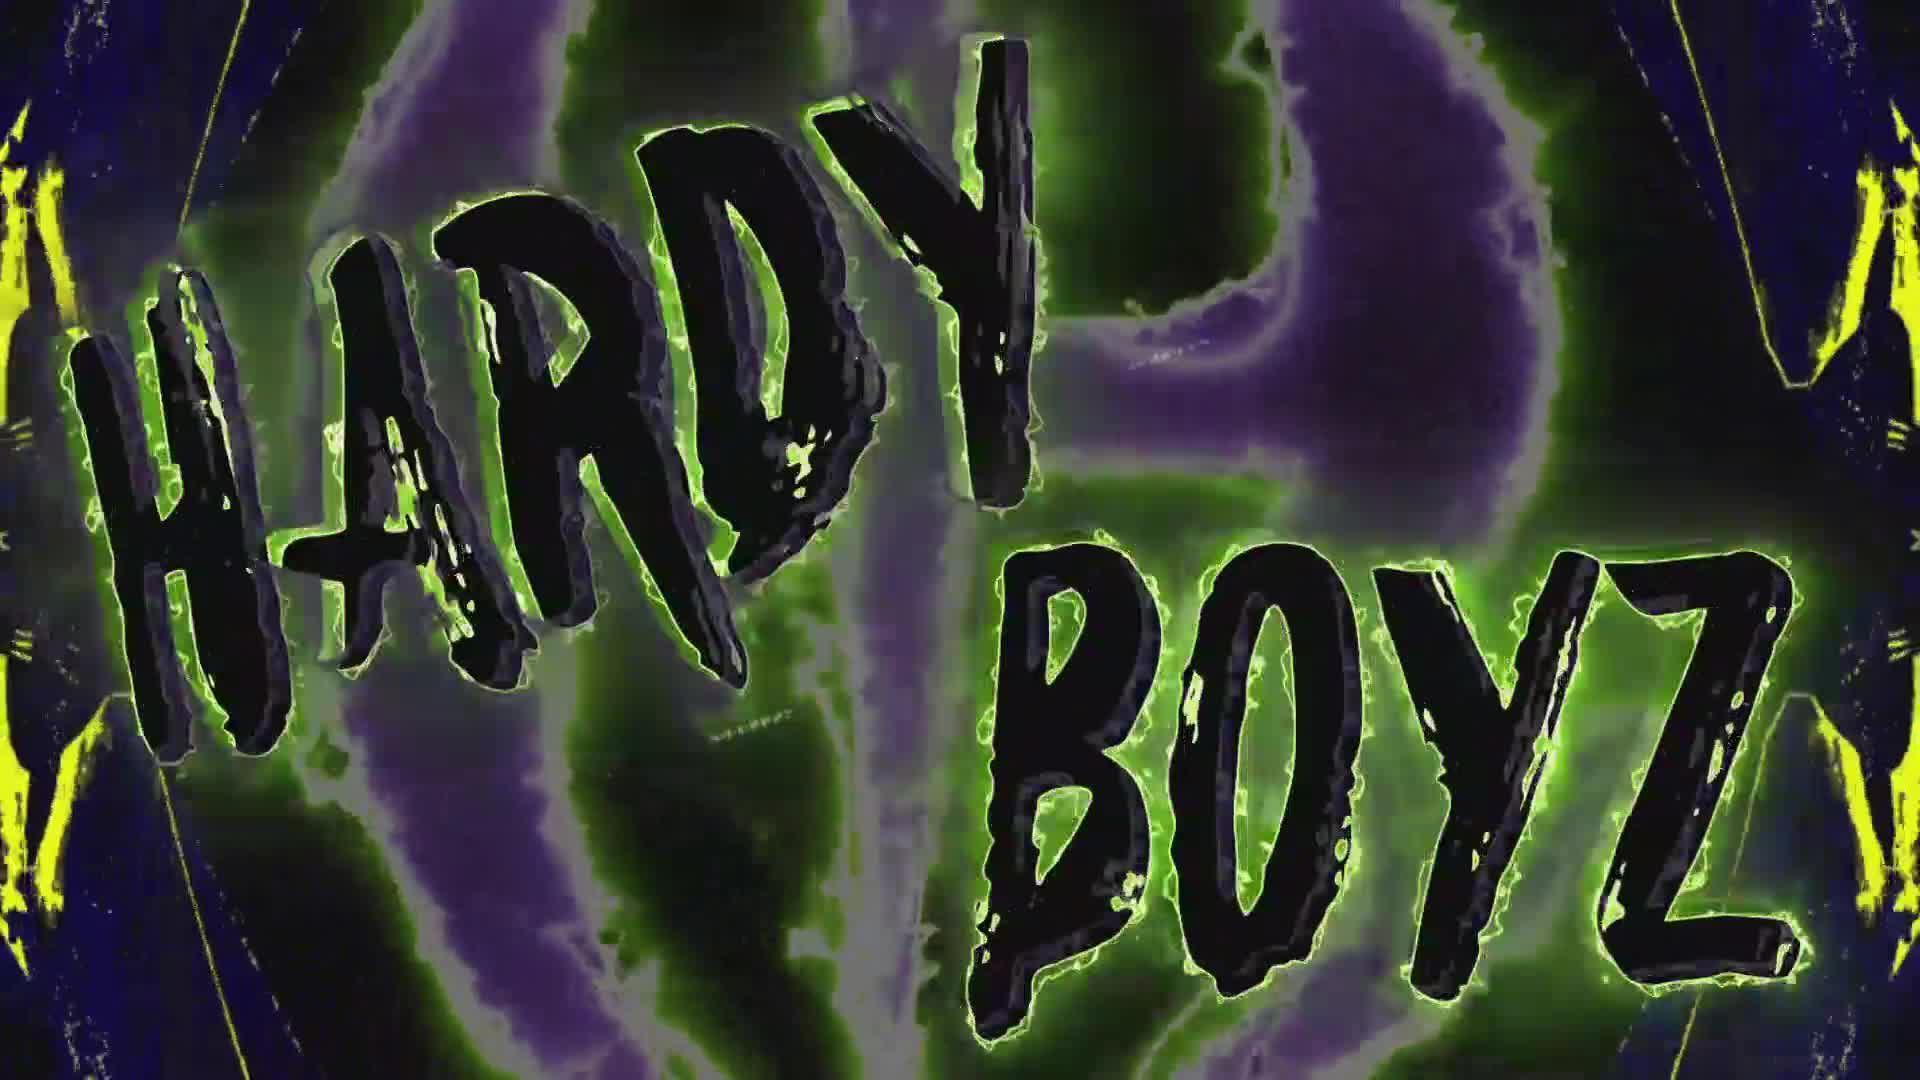 Hardy Boyz Entrance Video